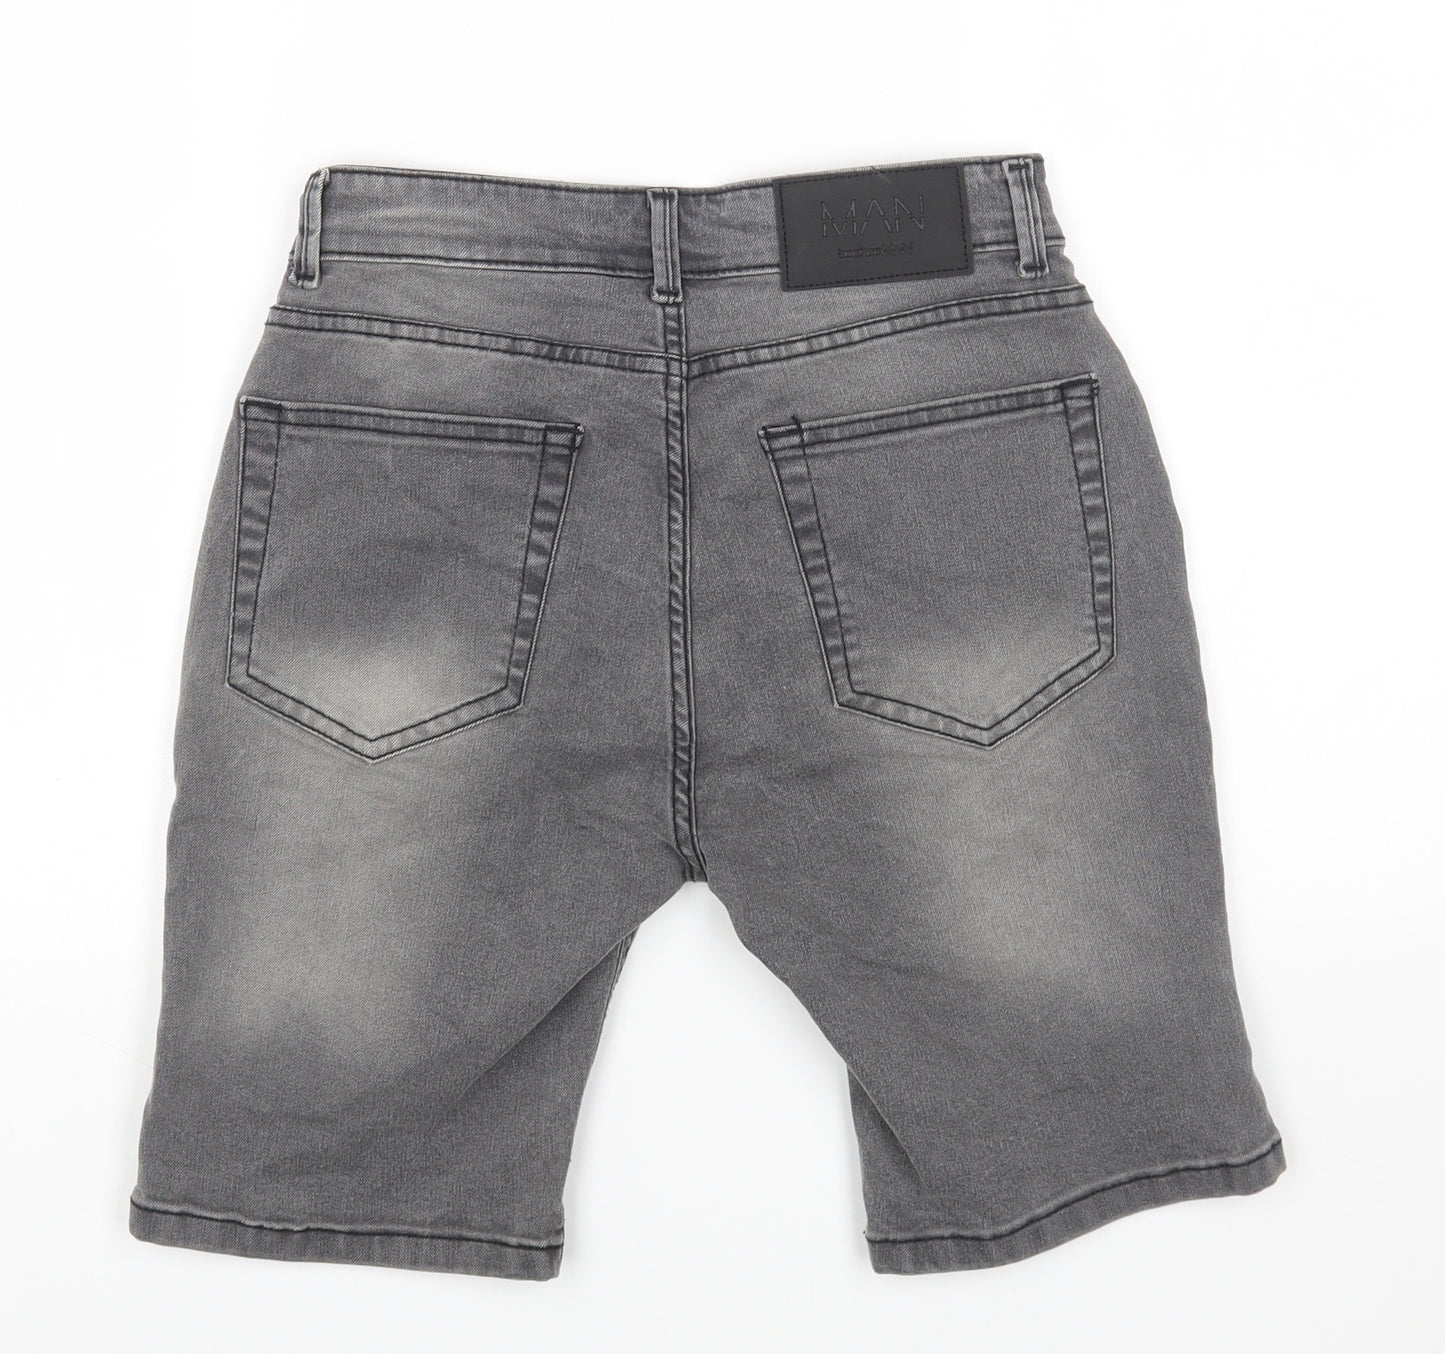 Topman Mens Black Cotton Chino Shorts Size 30 in L7 in Regular Zip